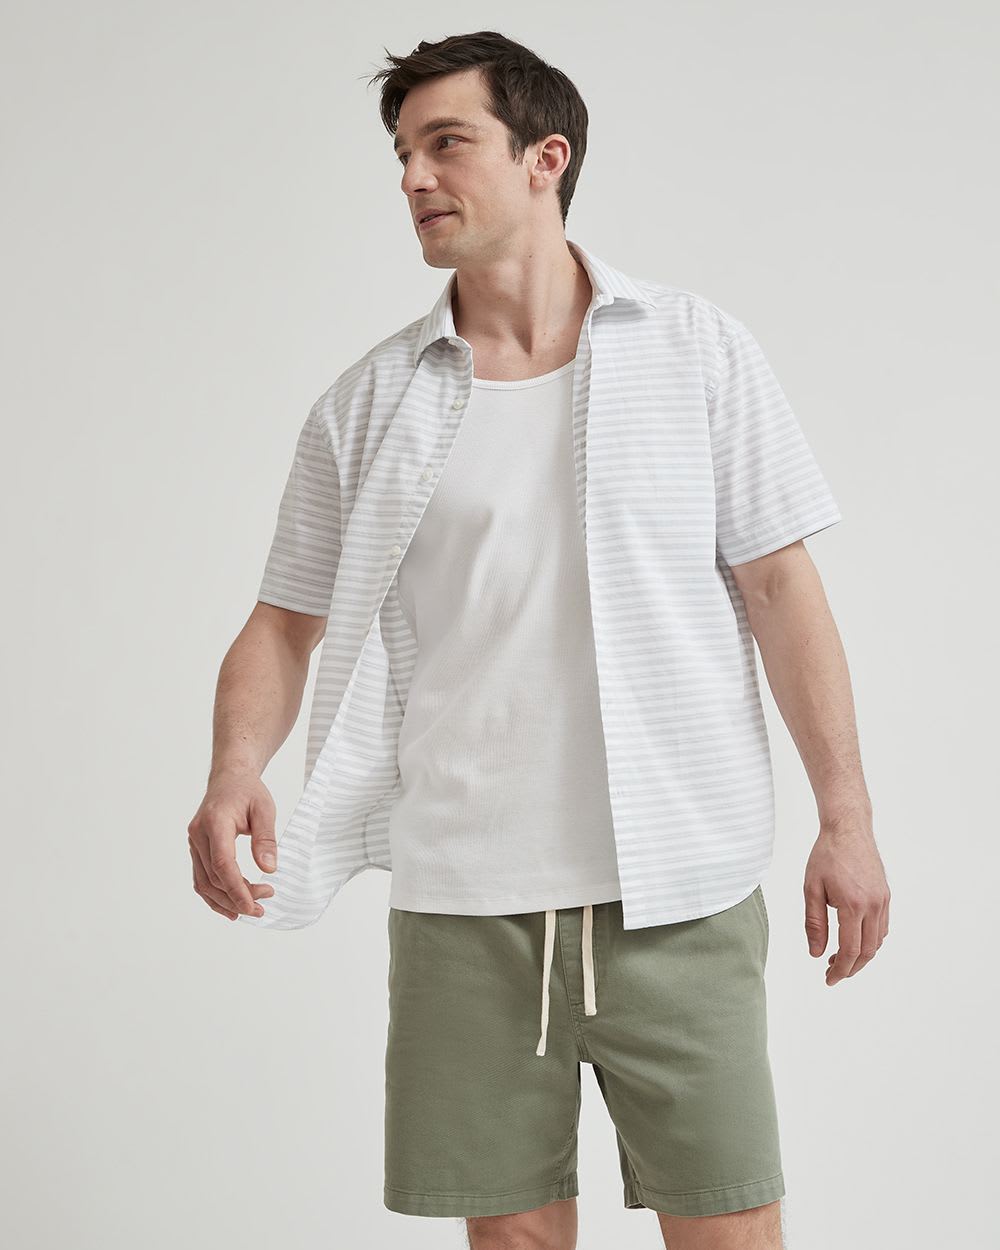 Short-Sleeve White Cotton Shirt with Stripes | RW&CO.